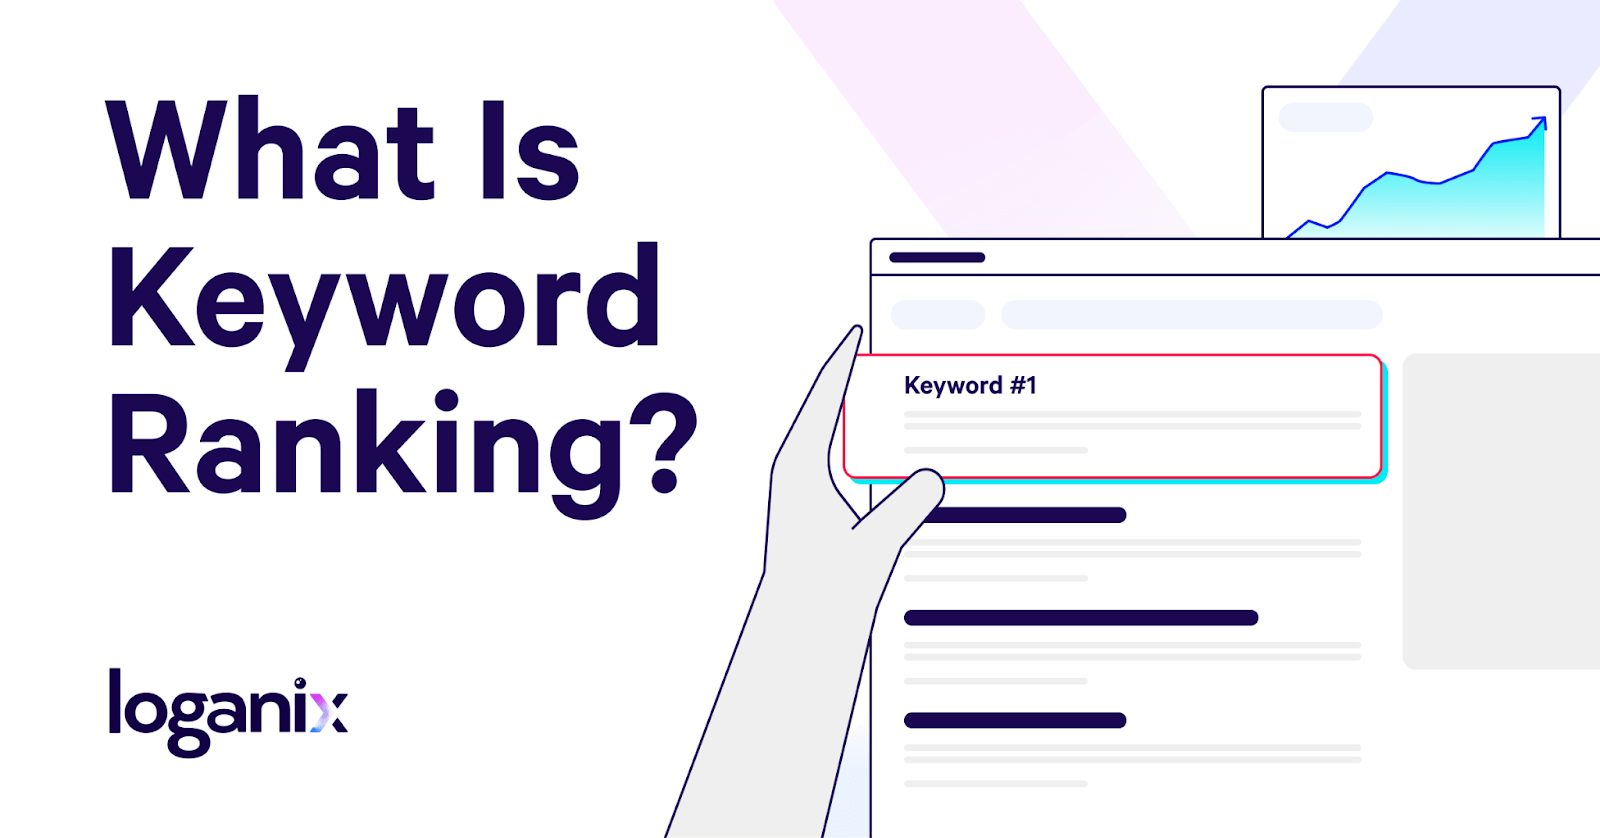 What Is Keyword Ranking?